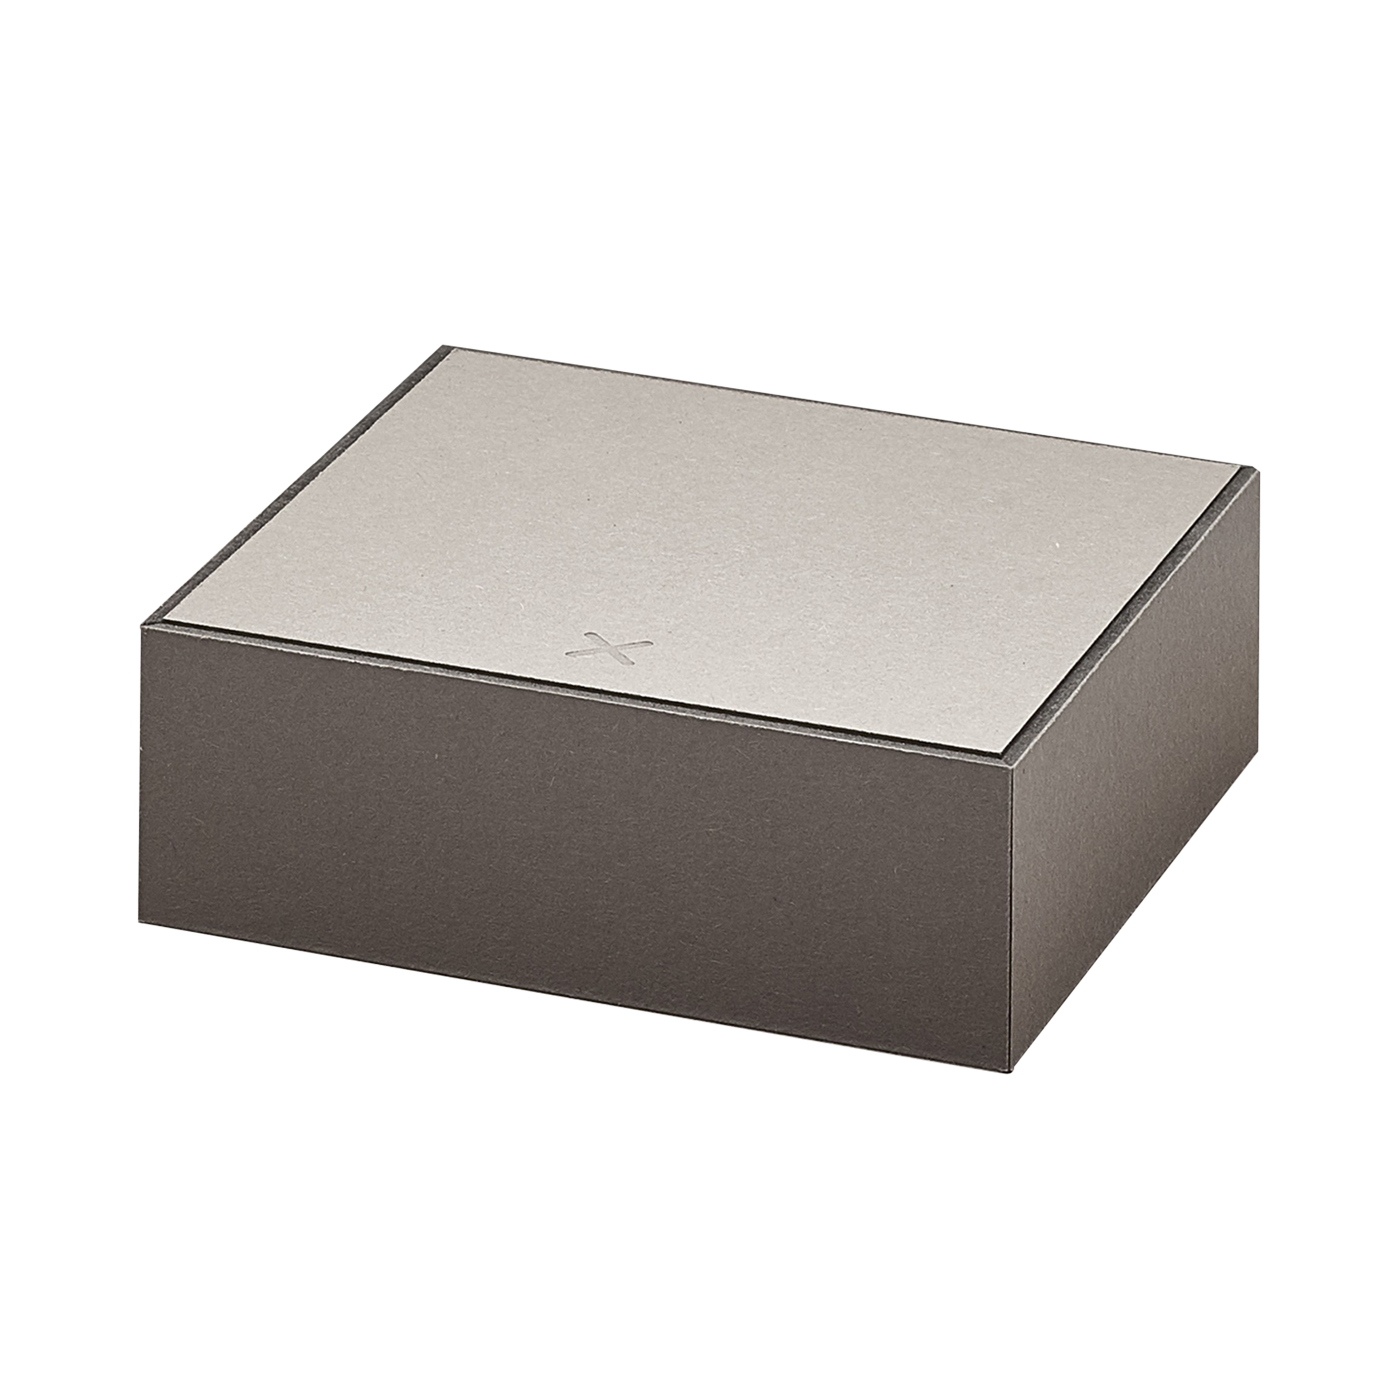 PICA-Design Schmucketui "Flipbox", grau, 90 x 90 x 30 mm - 1 Stück